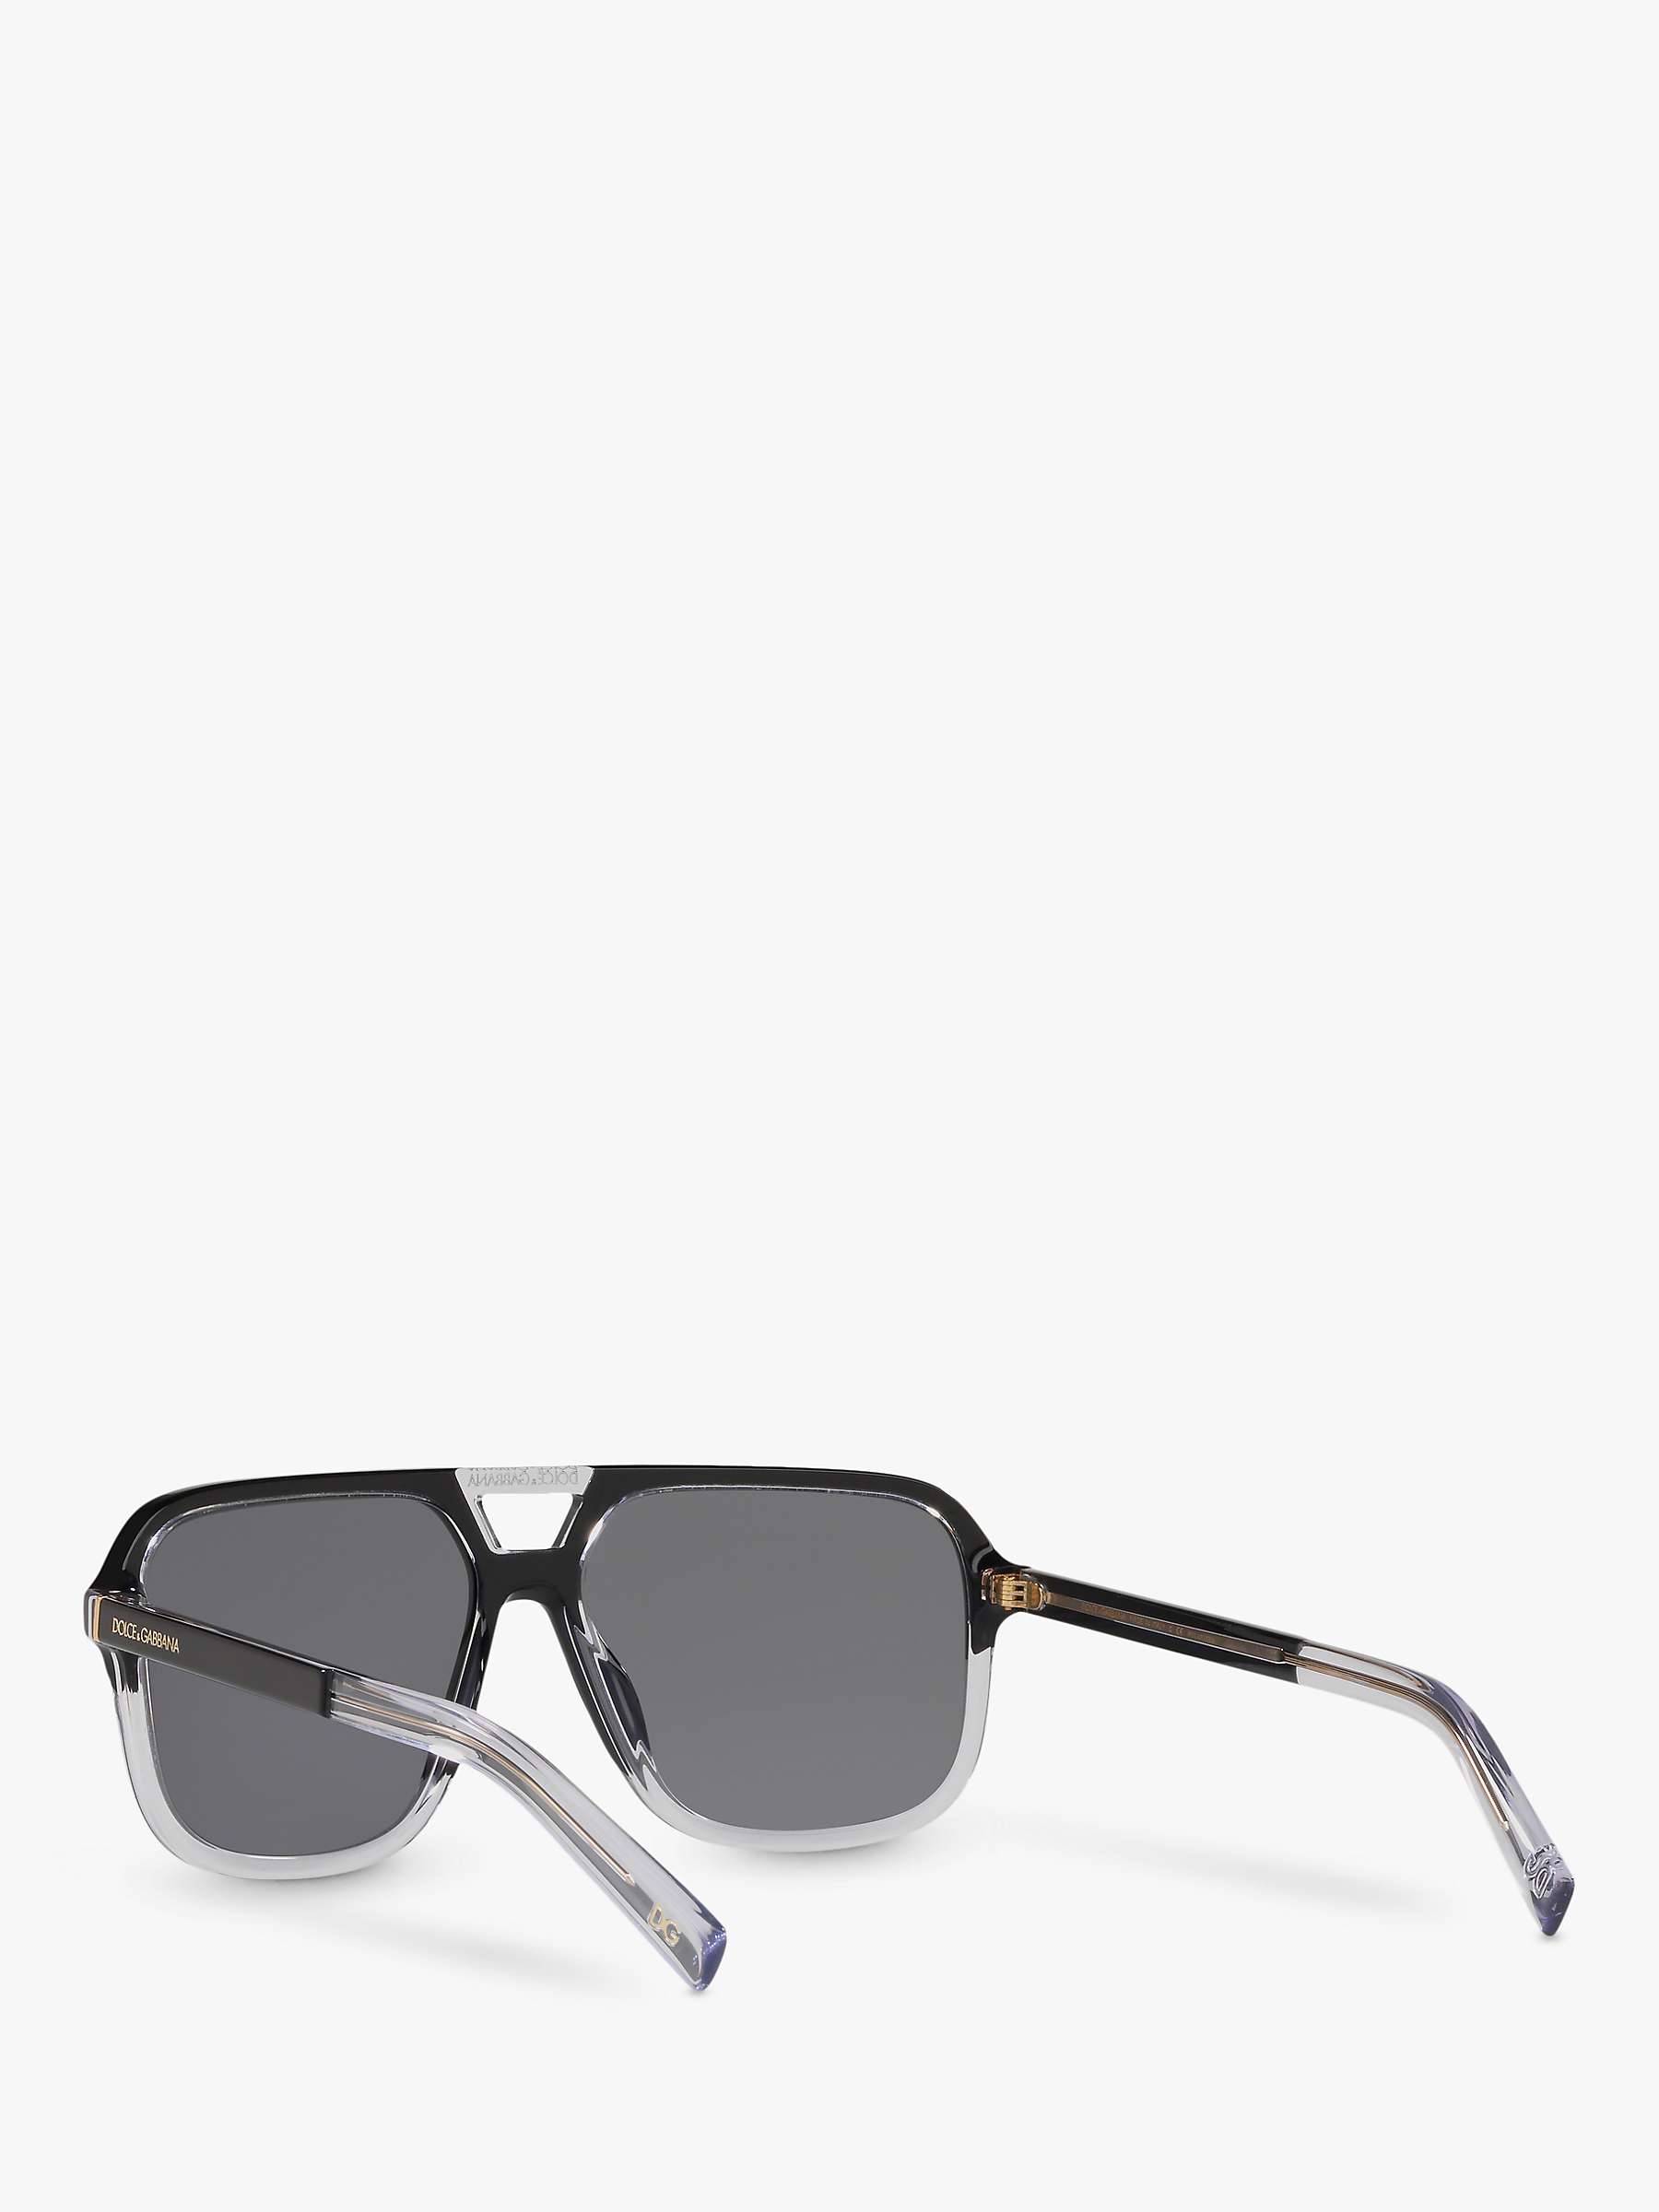 Dolce & Gabbana DG4354 Men's Polarised Square Sunglasses, Black Clear ...